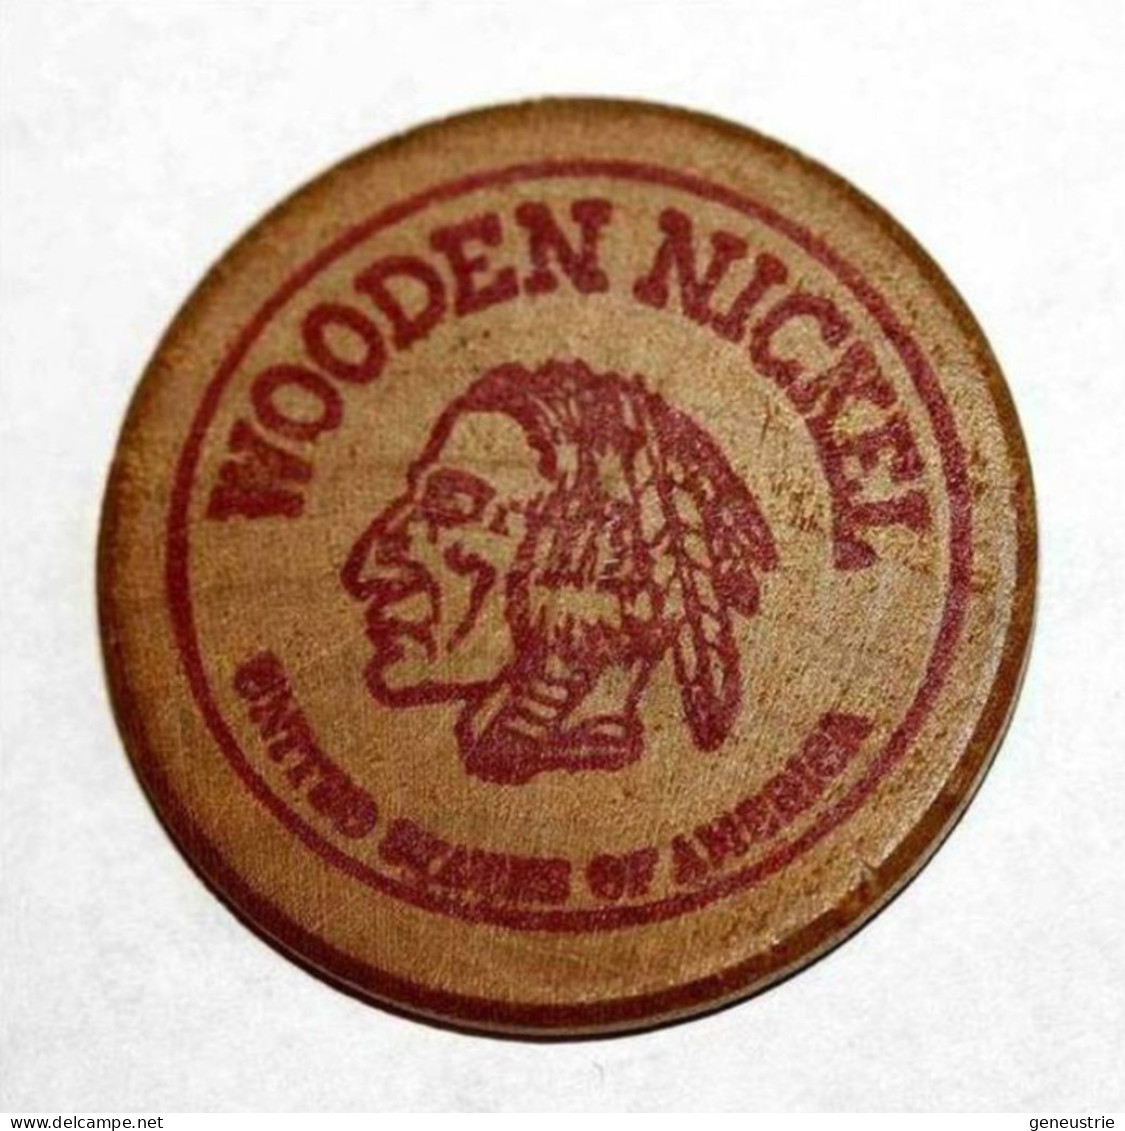 Wooden Token 1$ - Wooden Nickel - Jeton Bois Monnaie Nécessité - Tête D'Indien - One Dollar - Etats-Unis - Monedas/ De Necesidad